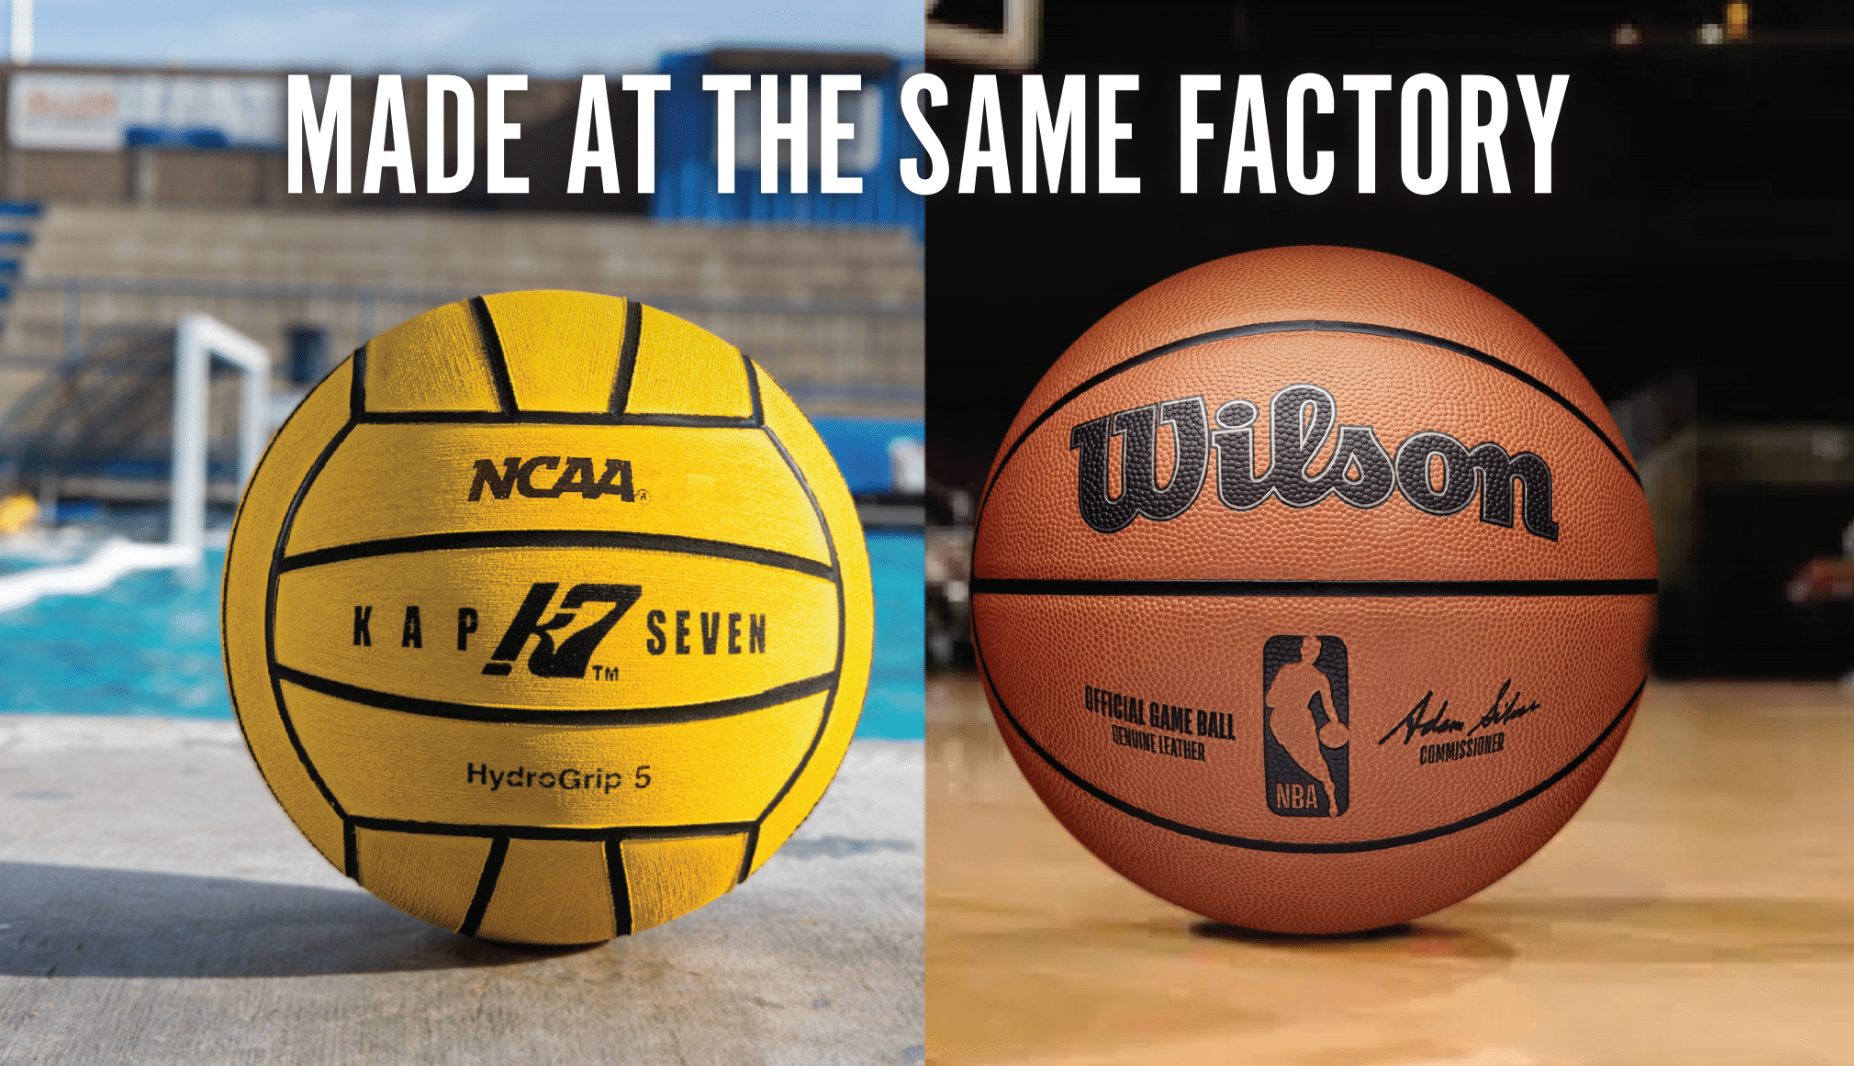 KAP7 Wilson balls made in same factory